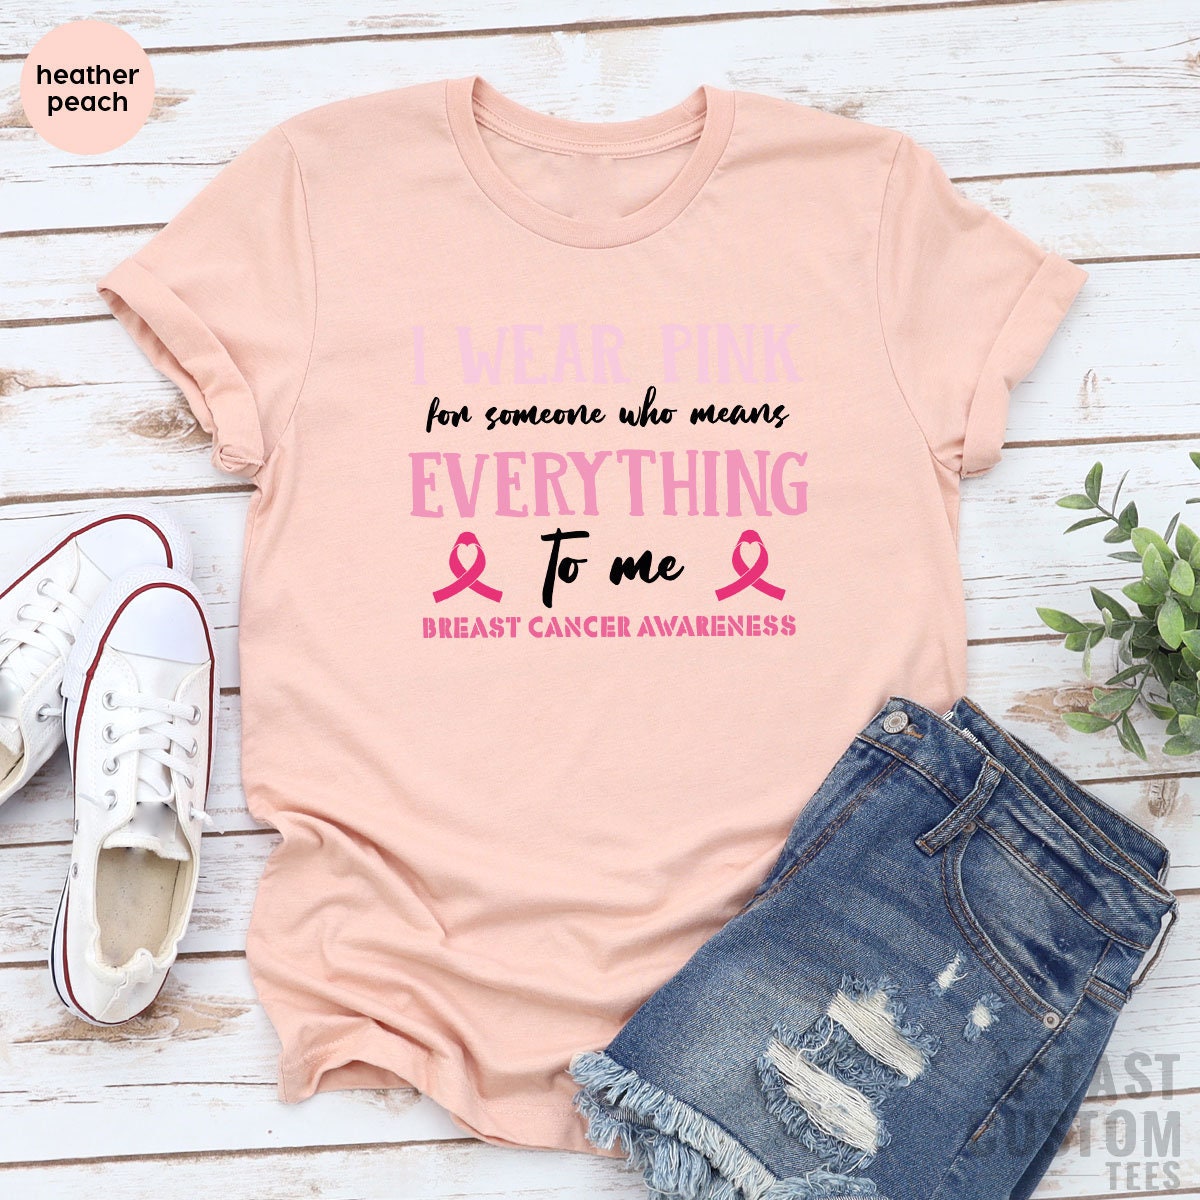 Breast Cancer Awareness Shirt, Cancer Support Shirt, Cancer Warrior T Shirt, October Cancer Shirt, Cancer Awareness Shirt, Be Strong Shirt - Fastdeliverytees.com